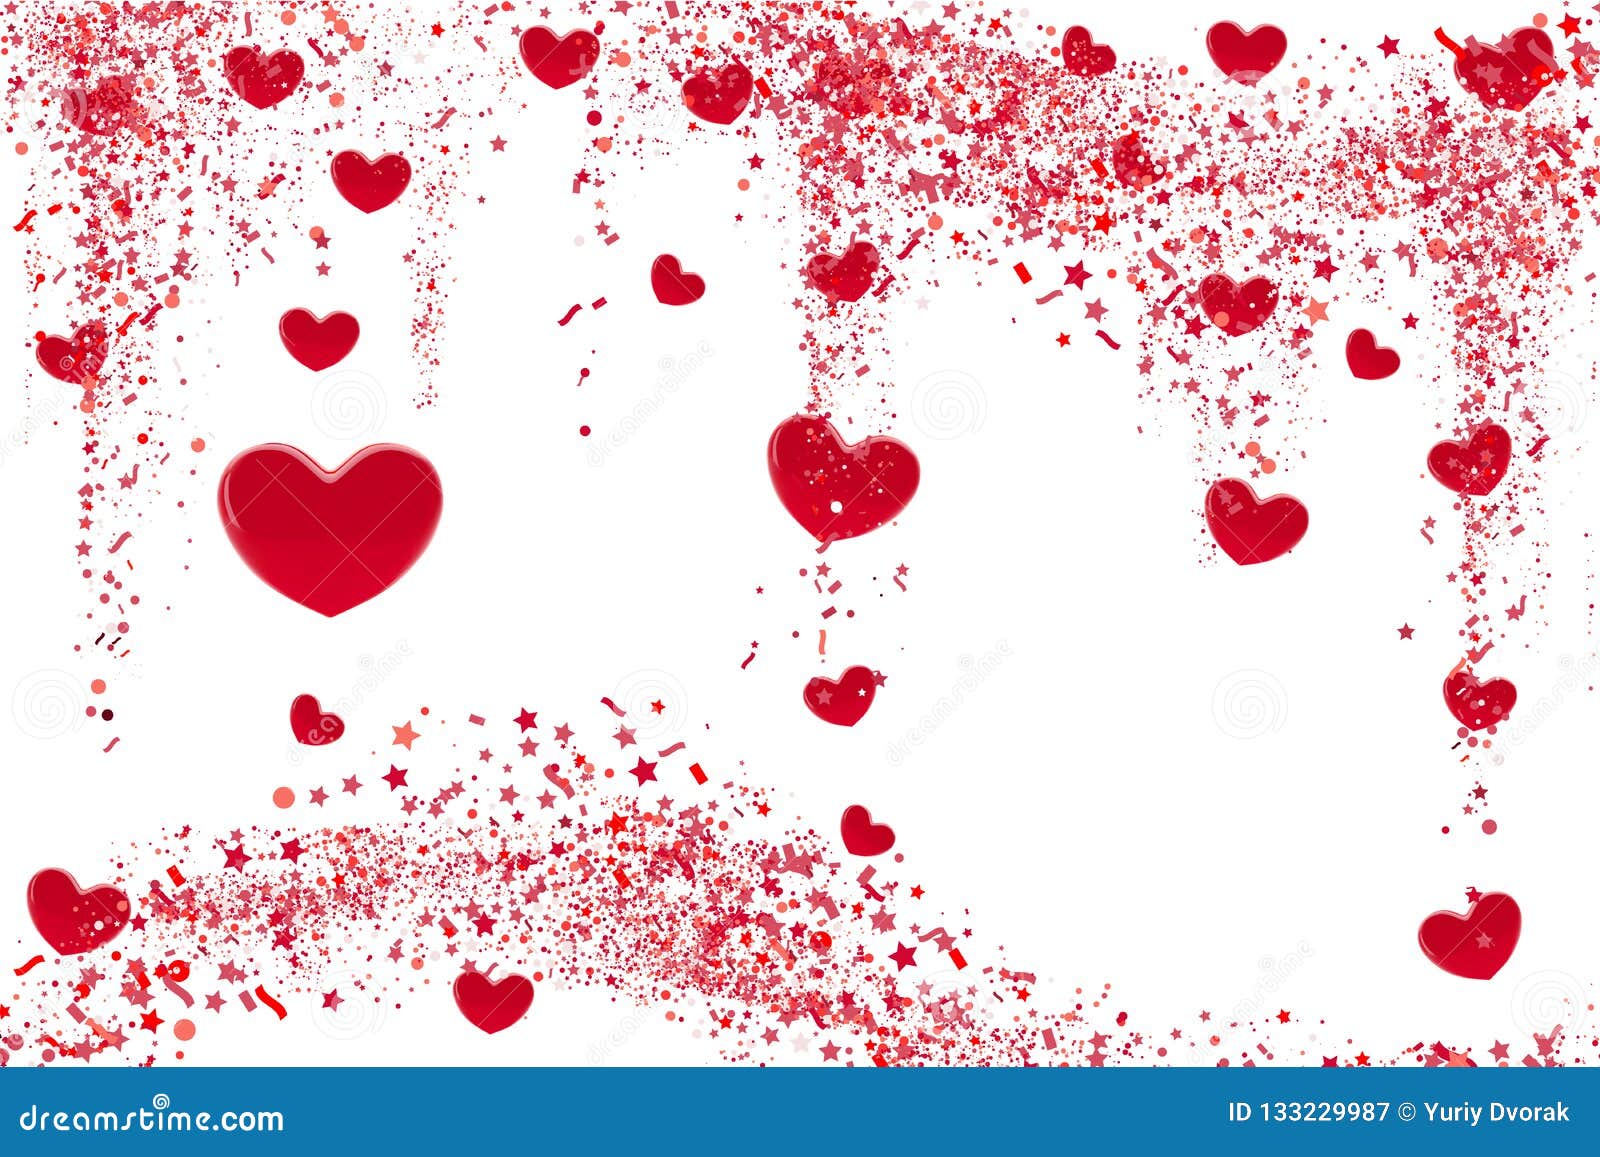 Download heart outline love symbol png images background  TOPpng